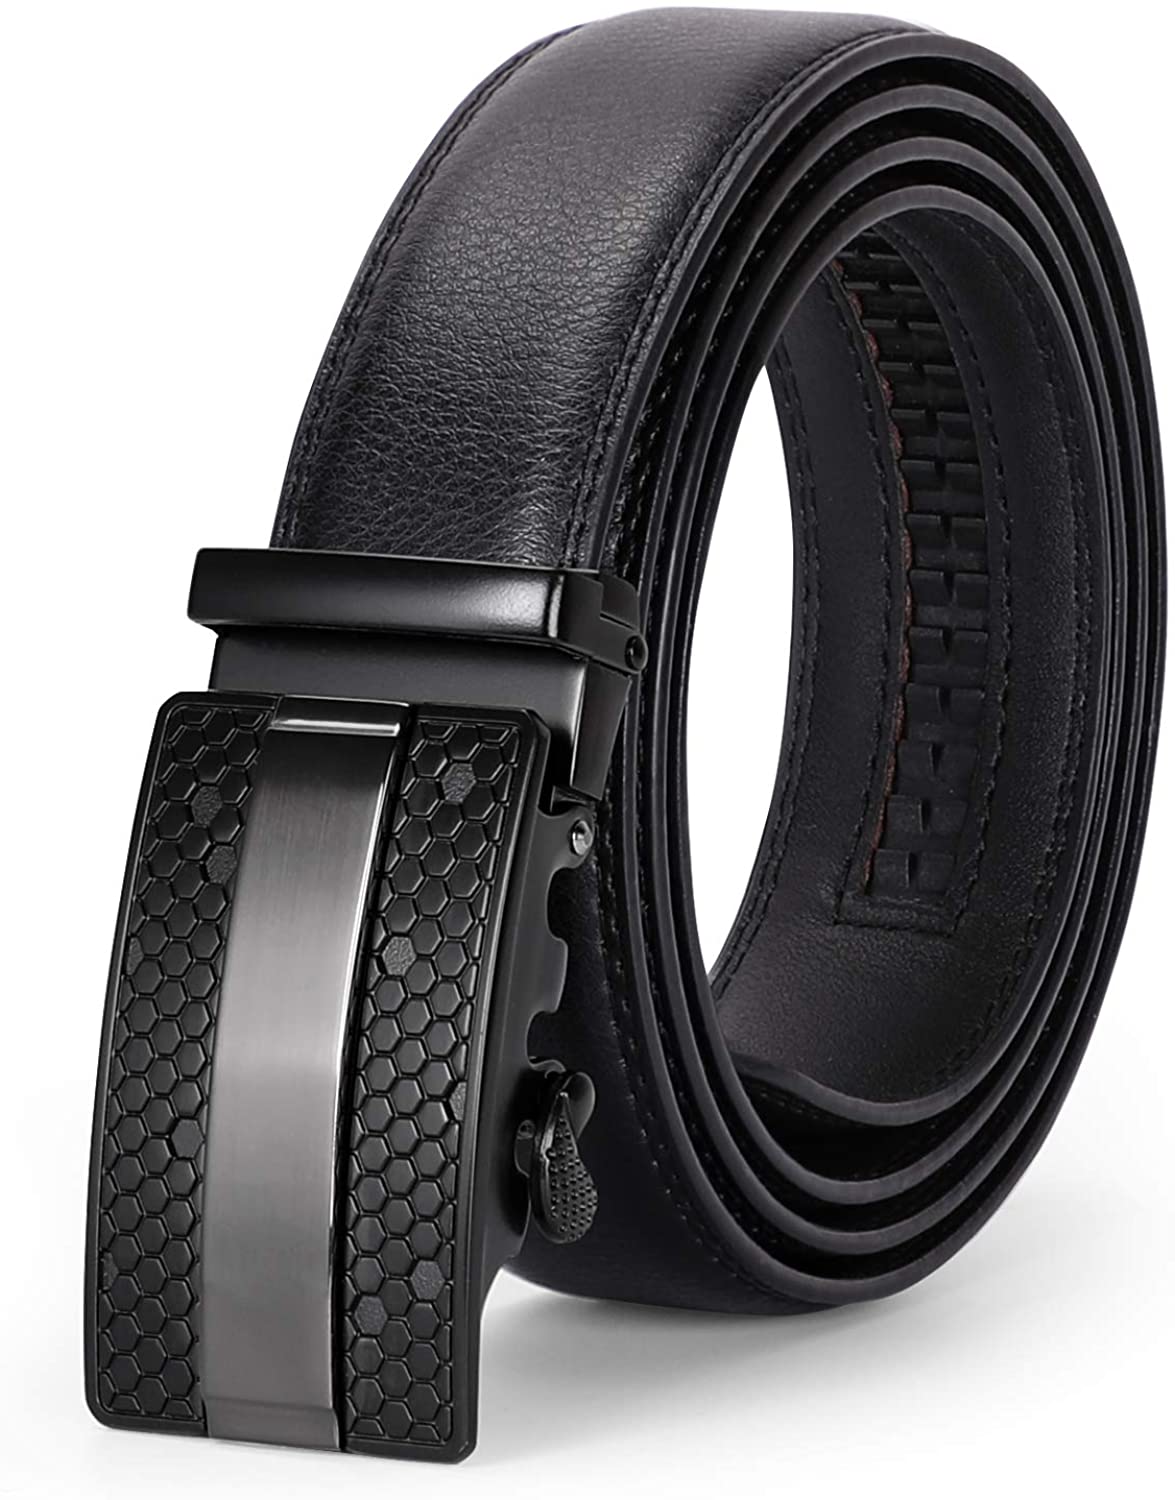  XZQTIVE Boy Ratchet Leather Belts Easy Slid Click Buckle Auto  Belt For Kids School Uniform Dress Jeans: Clothing, Shoes & Jewelry